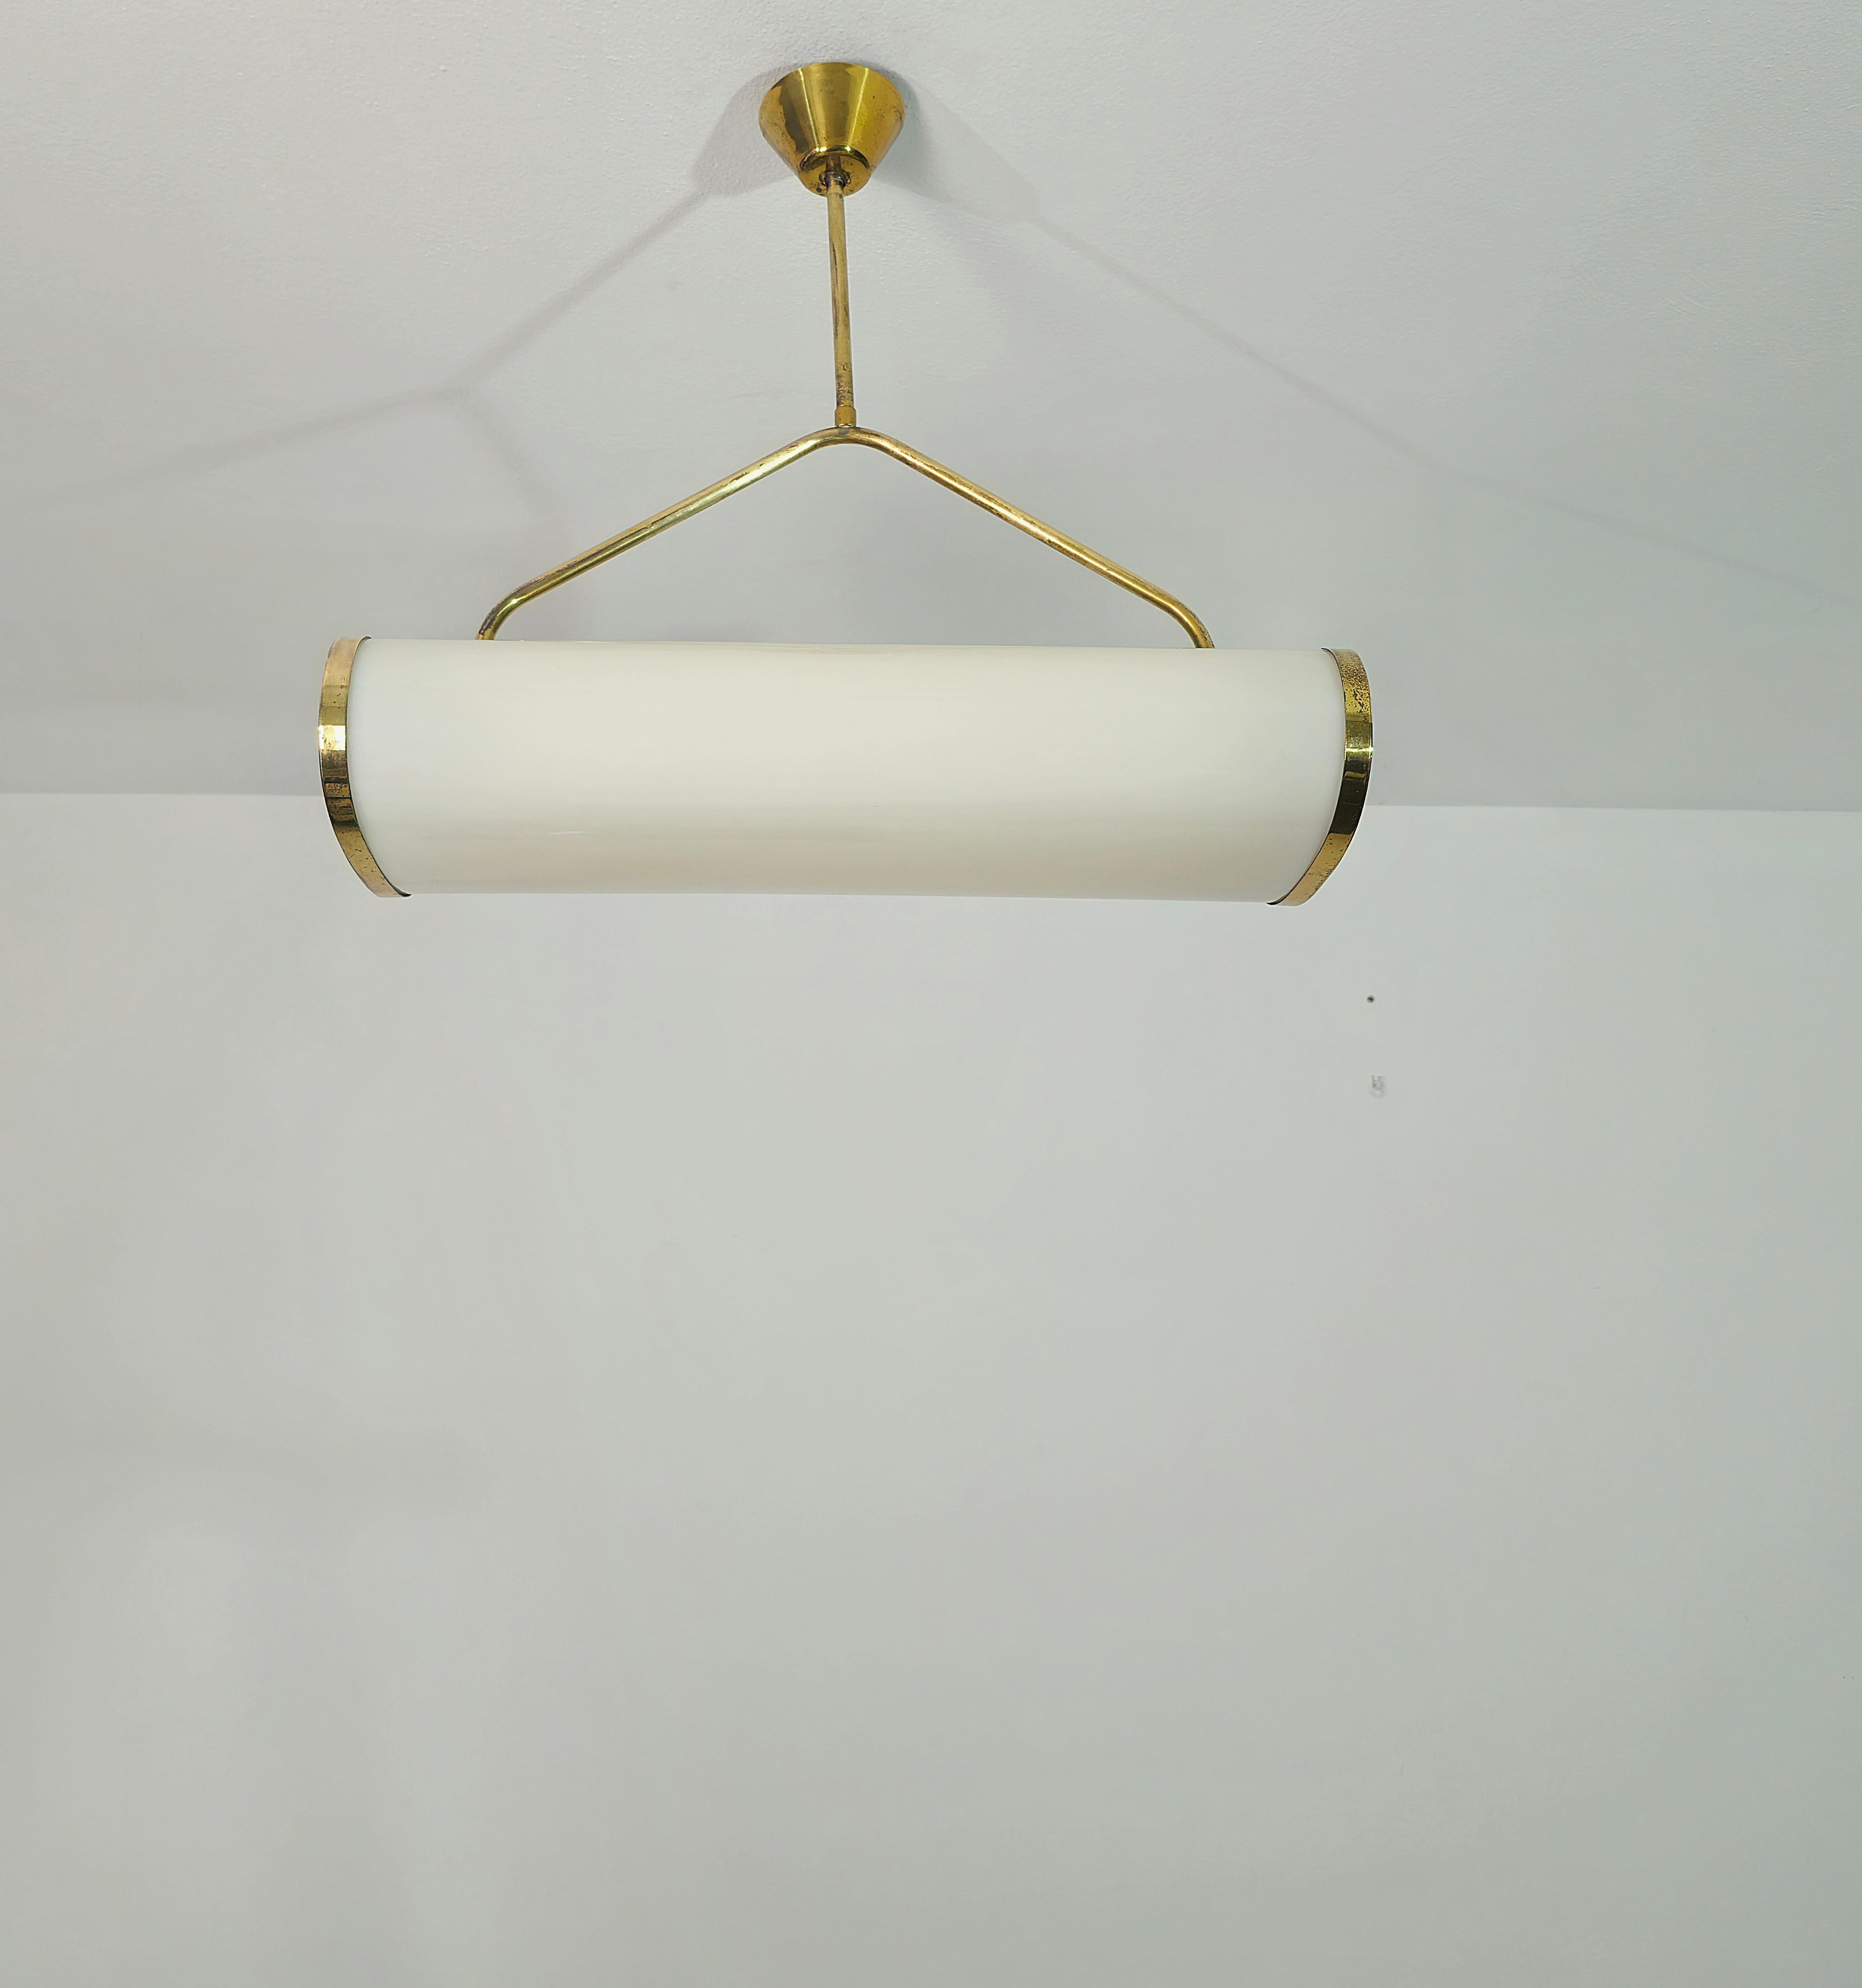 20th Century Suspension Lamp Plexiglass Brass Metal Midcentury Modern Italian Design 1960s For Sale